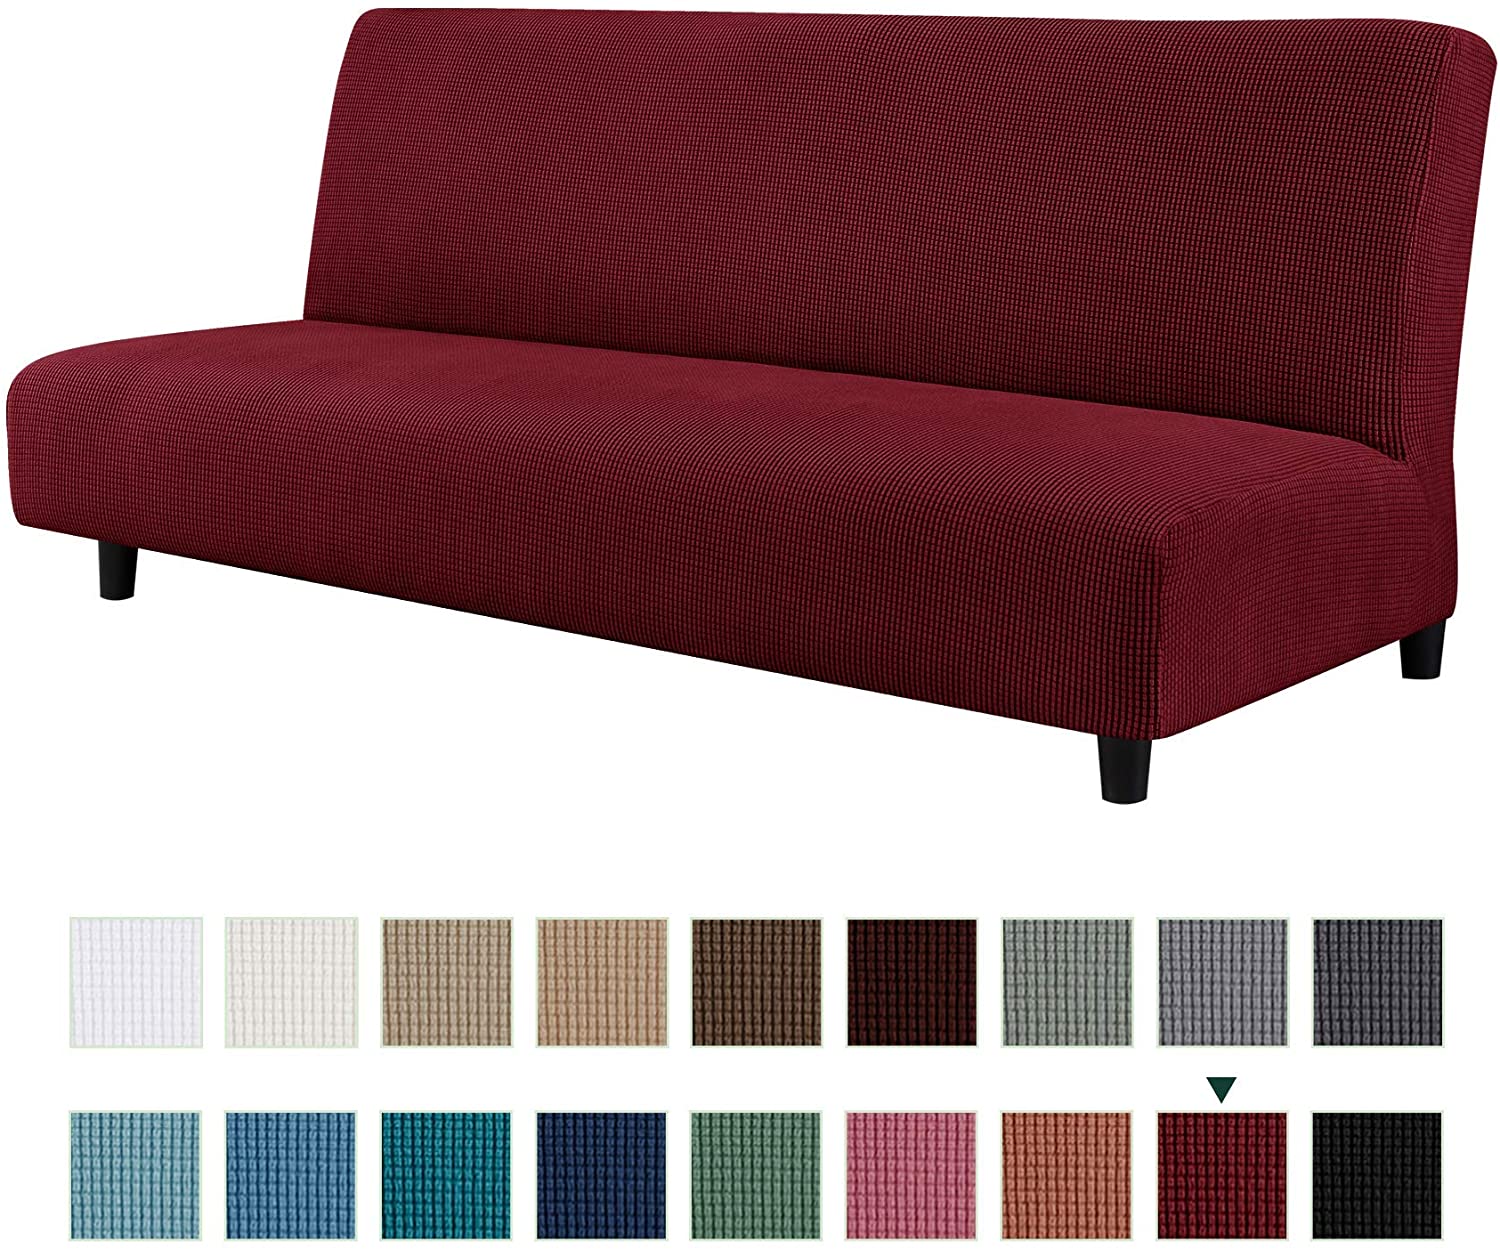 CHUN YI Jacquard Stretch Armless Sofa Slipcover, Soft Elastic Fitted Folding Sof